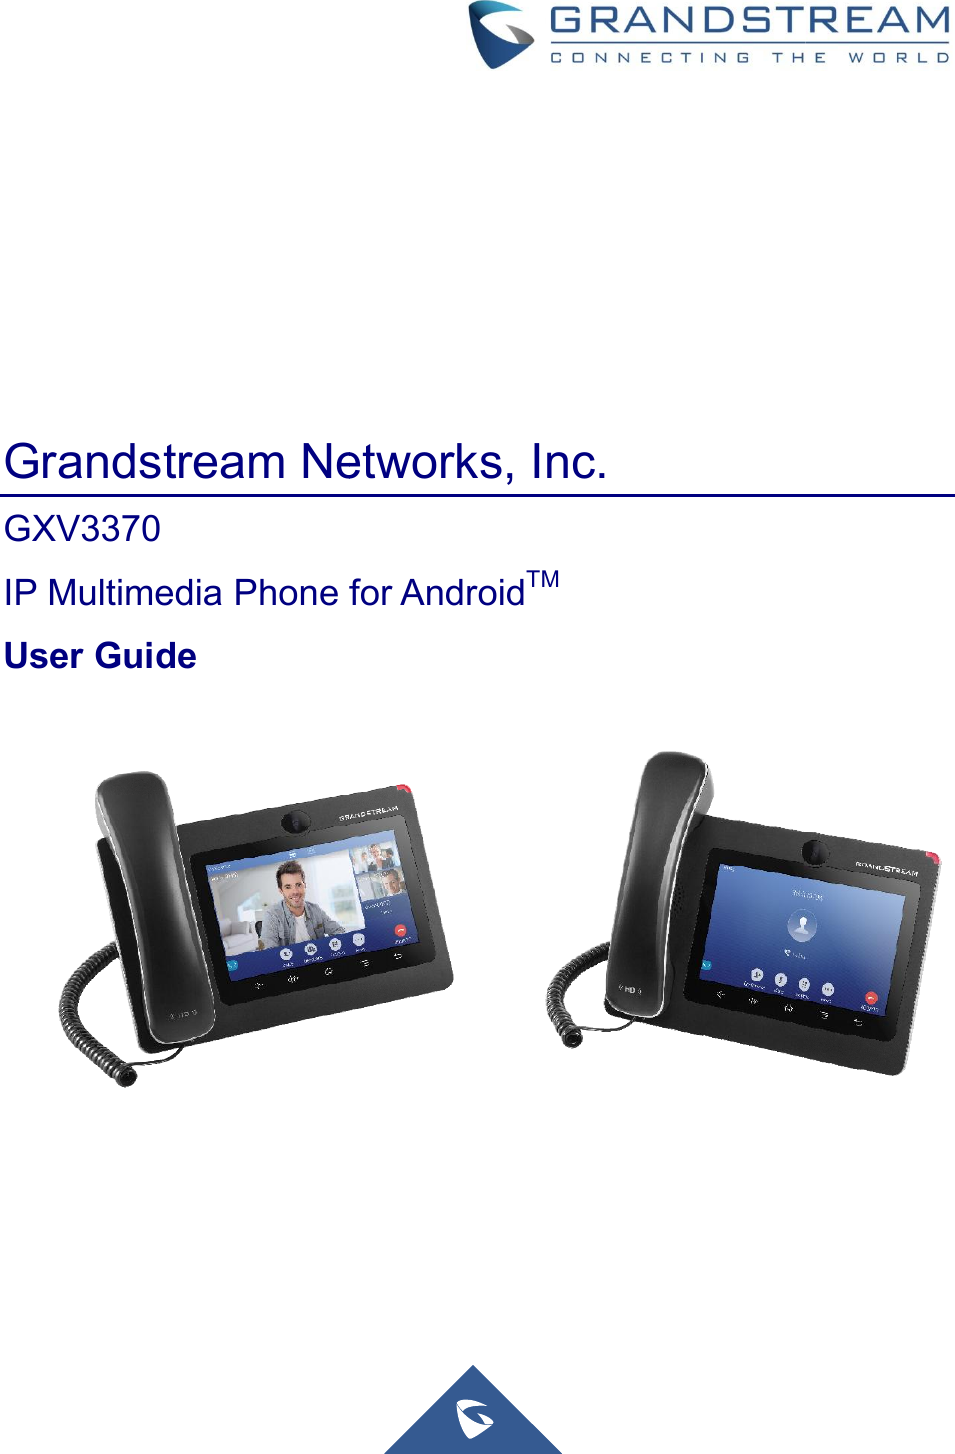                Grandstream Networks, Inc.GXV3370 IP Multimedia Phone for AndroidUser Guide    Grandstream Networks, Inc. IP Multimedia Phone for AndroidTM    